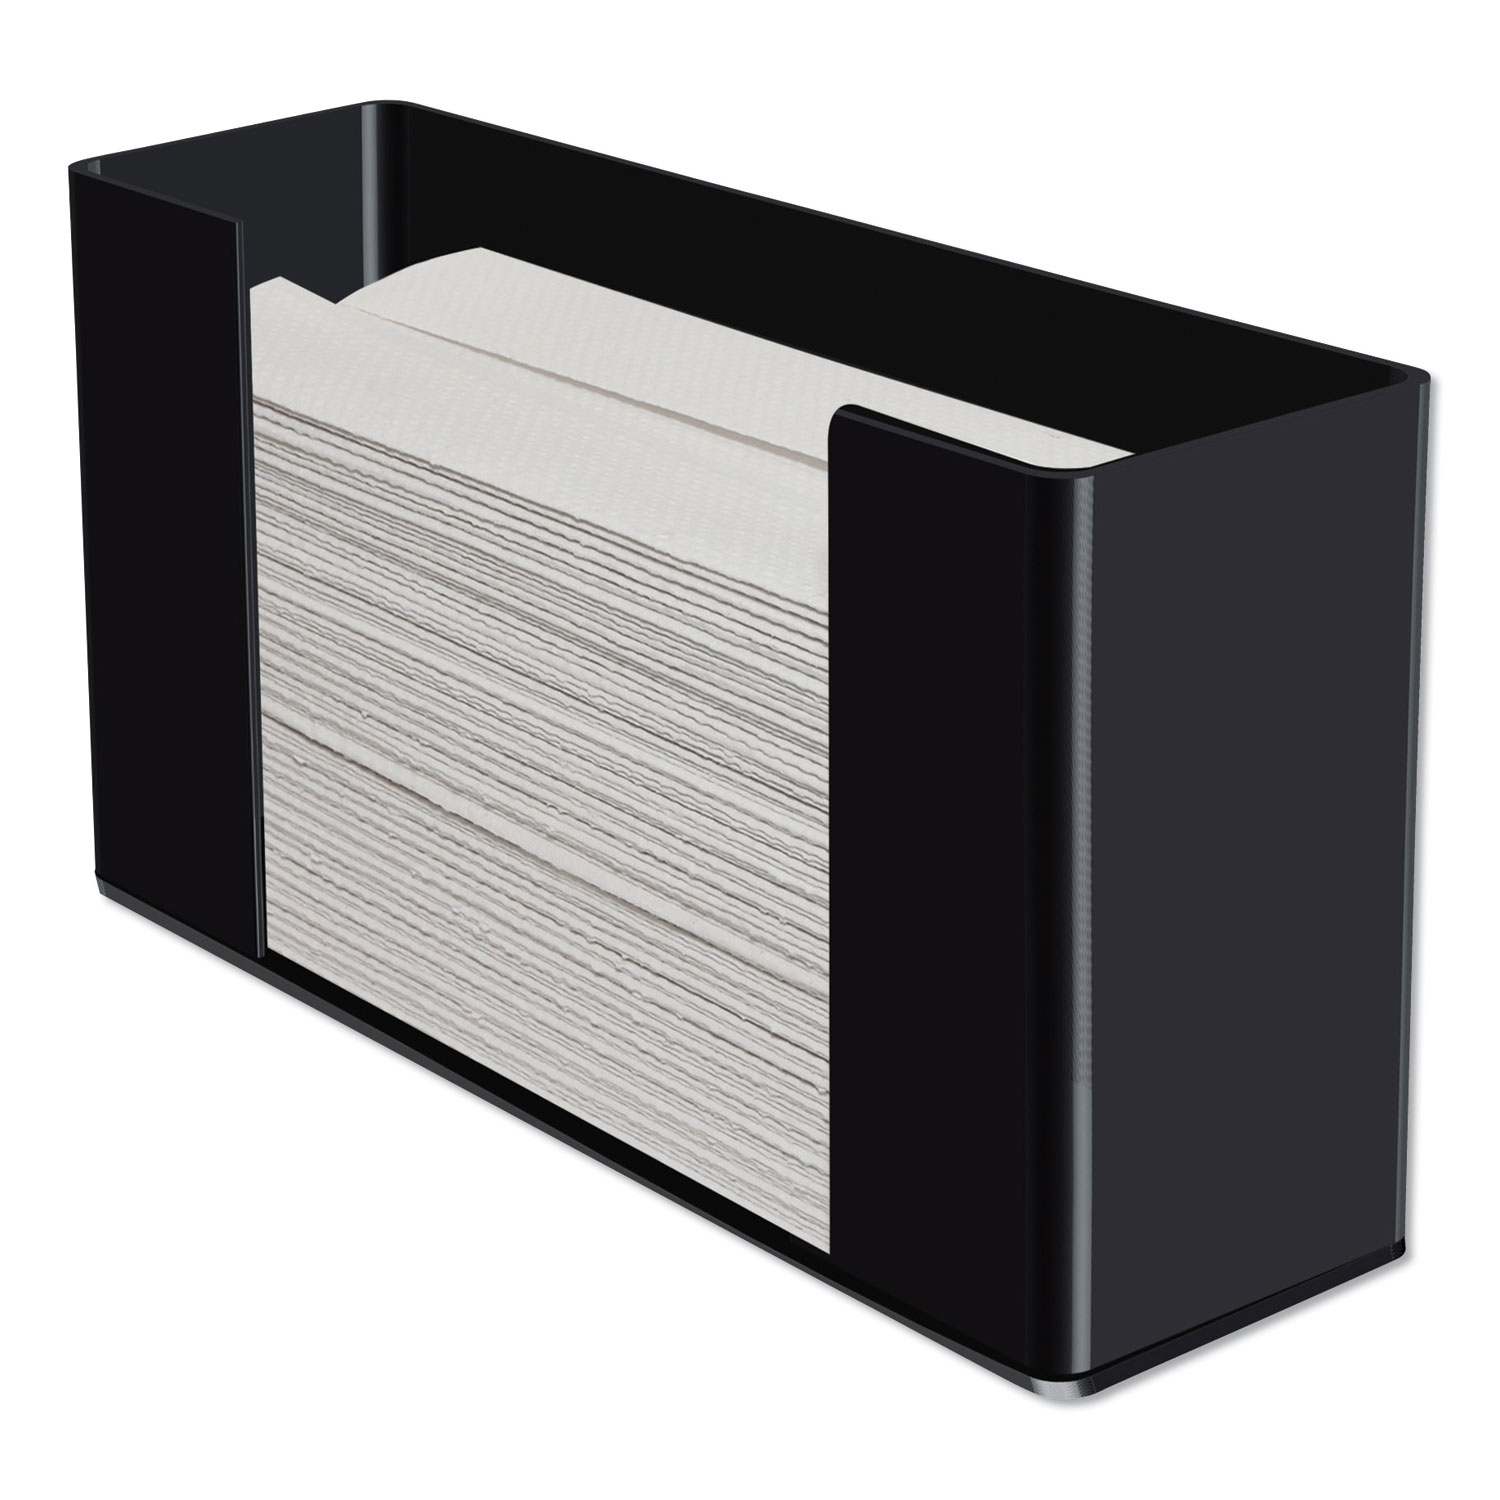  Kantek AH190B Multifold Paper Towel Dispenser, Acrylic, 12.5 x 4.4 x 7, Black (KTKAH190B) 